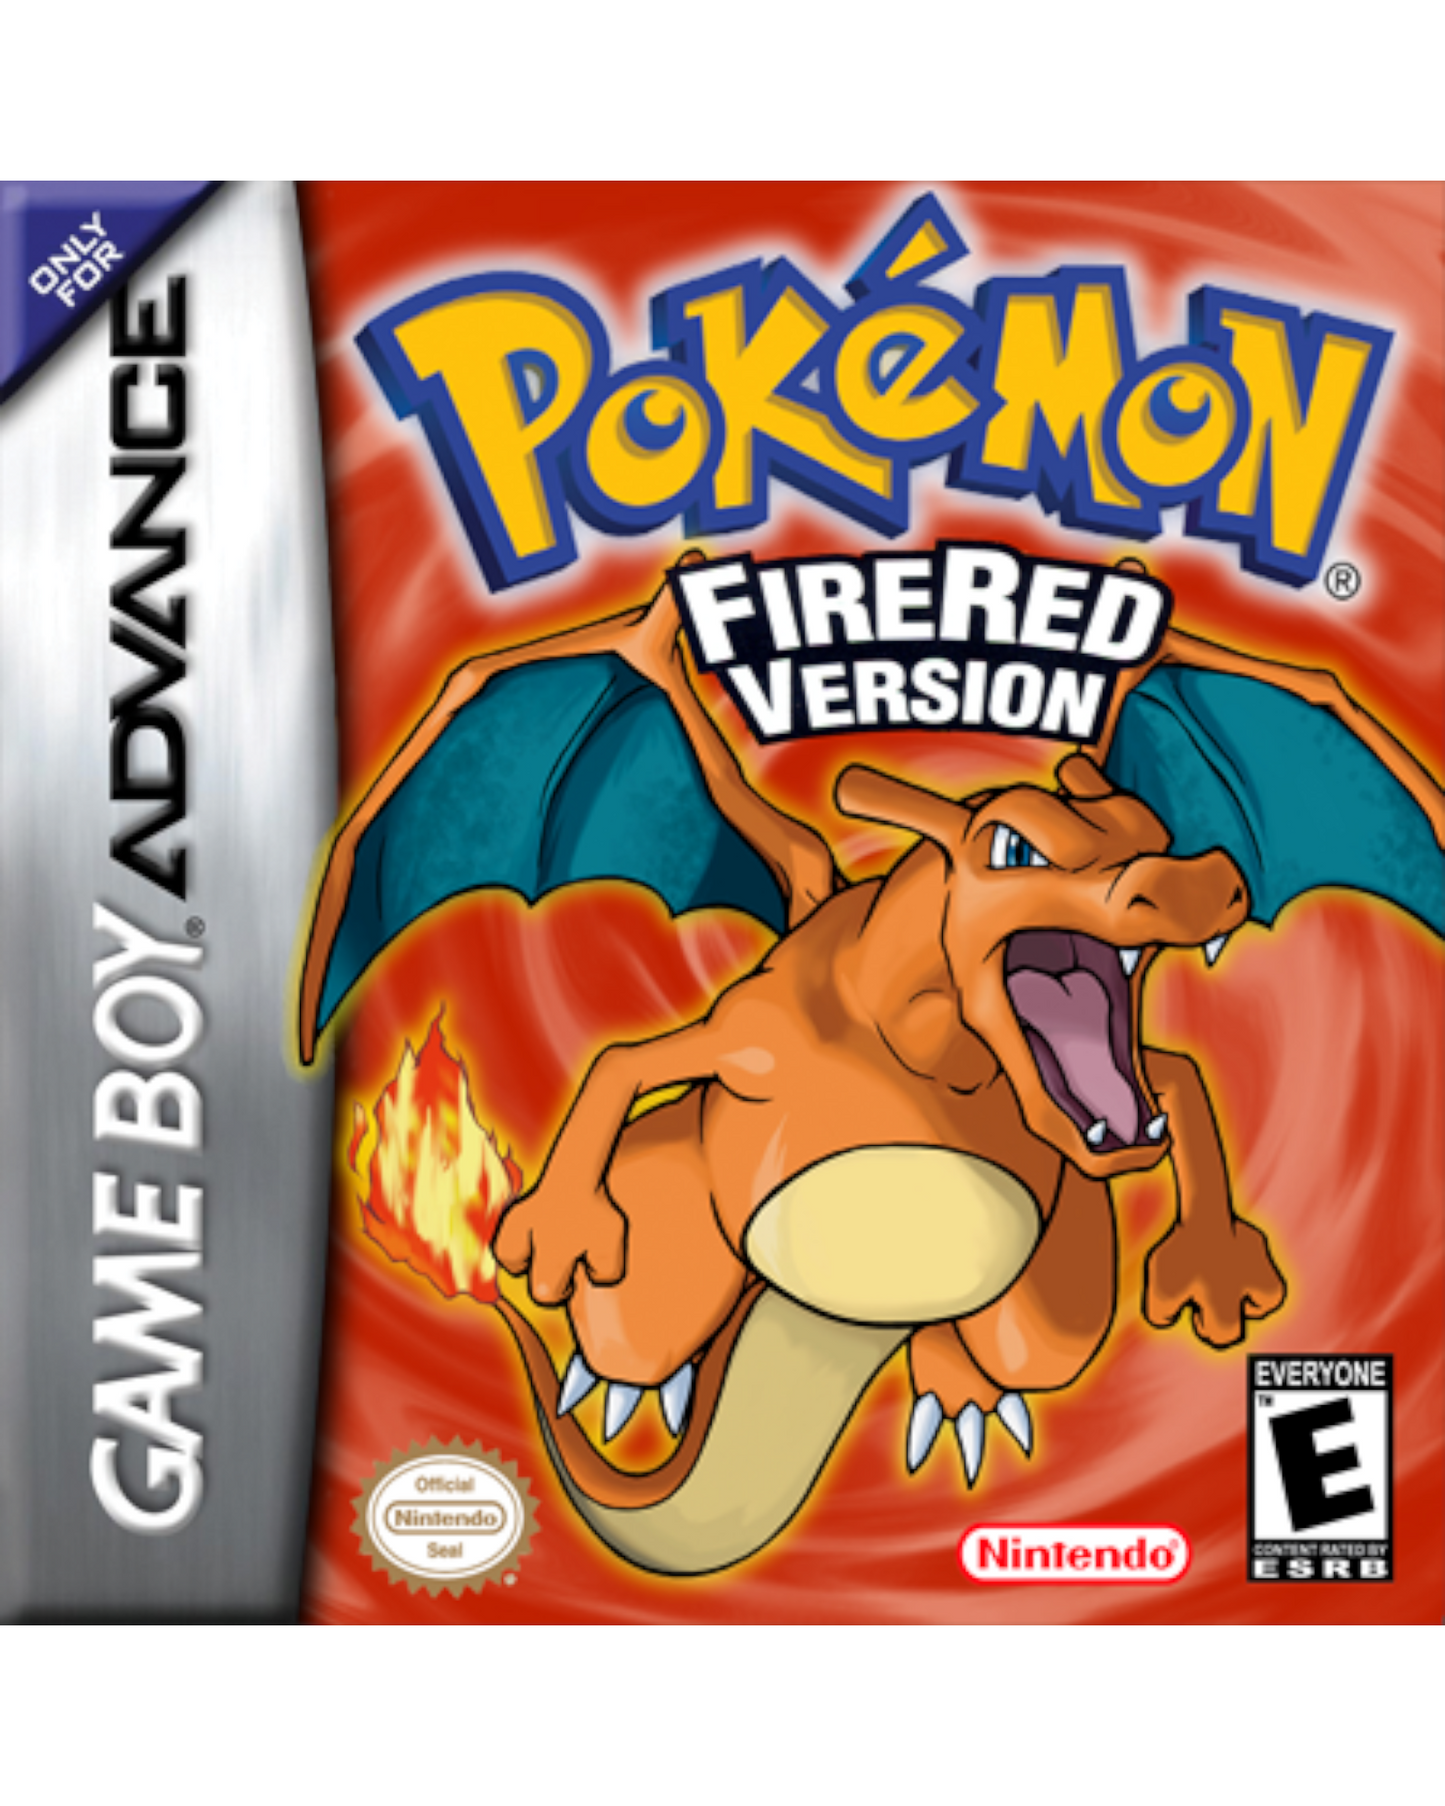 Pokemon Fire Red Version – Vetro Gaming